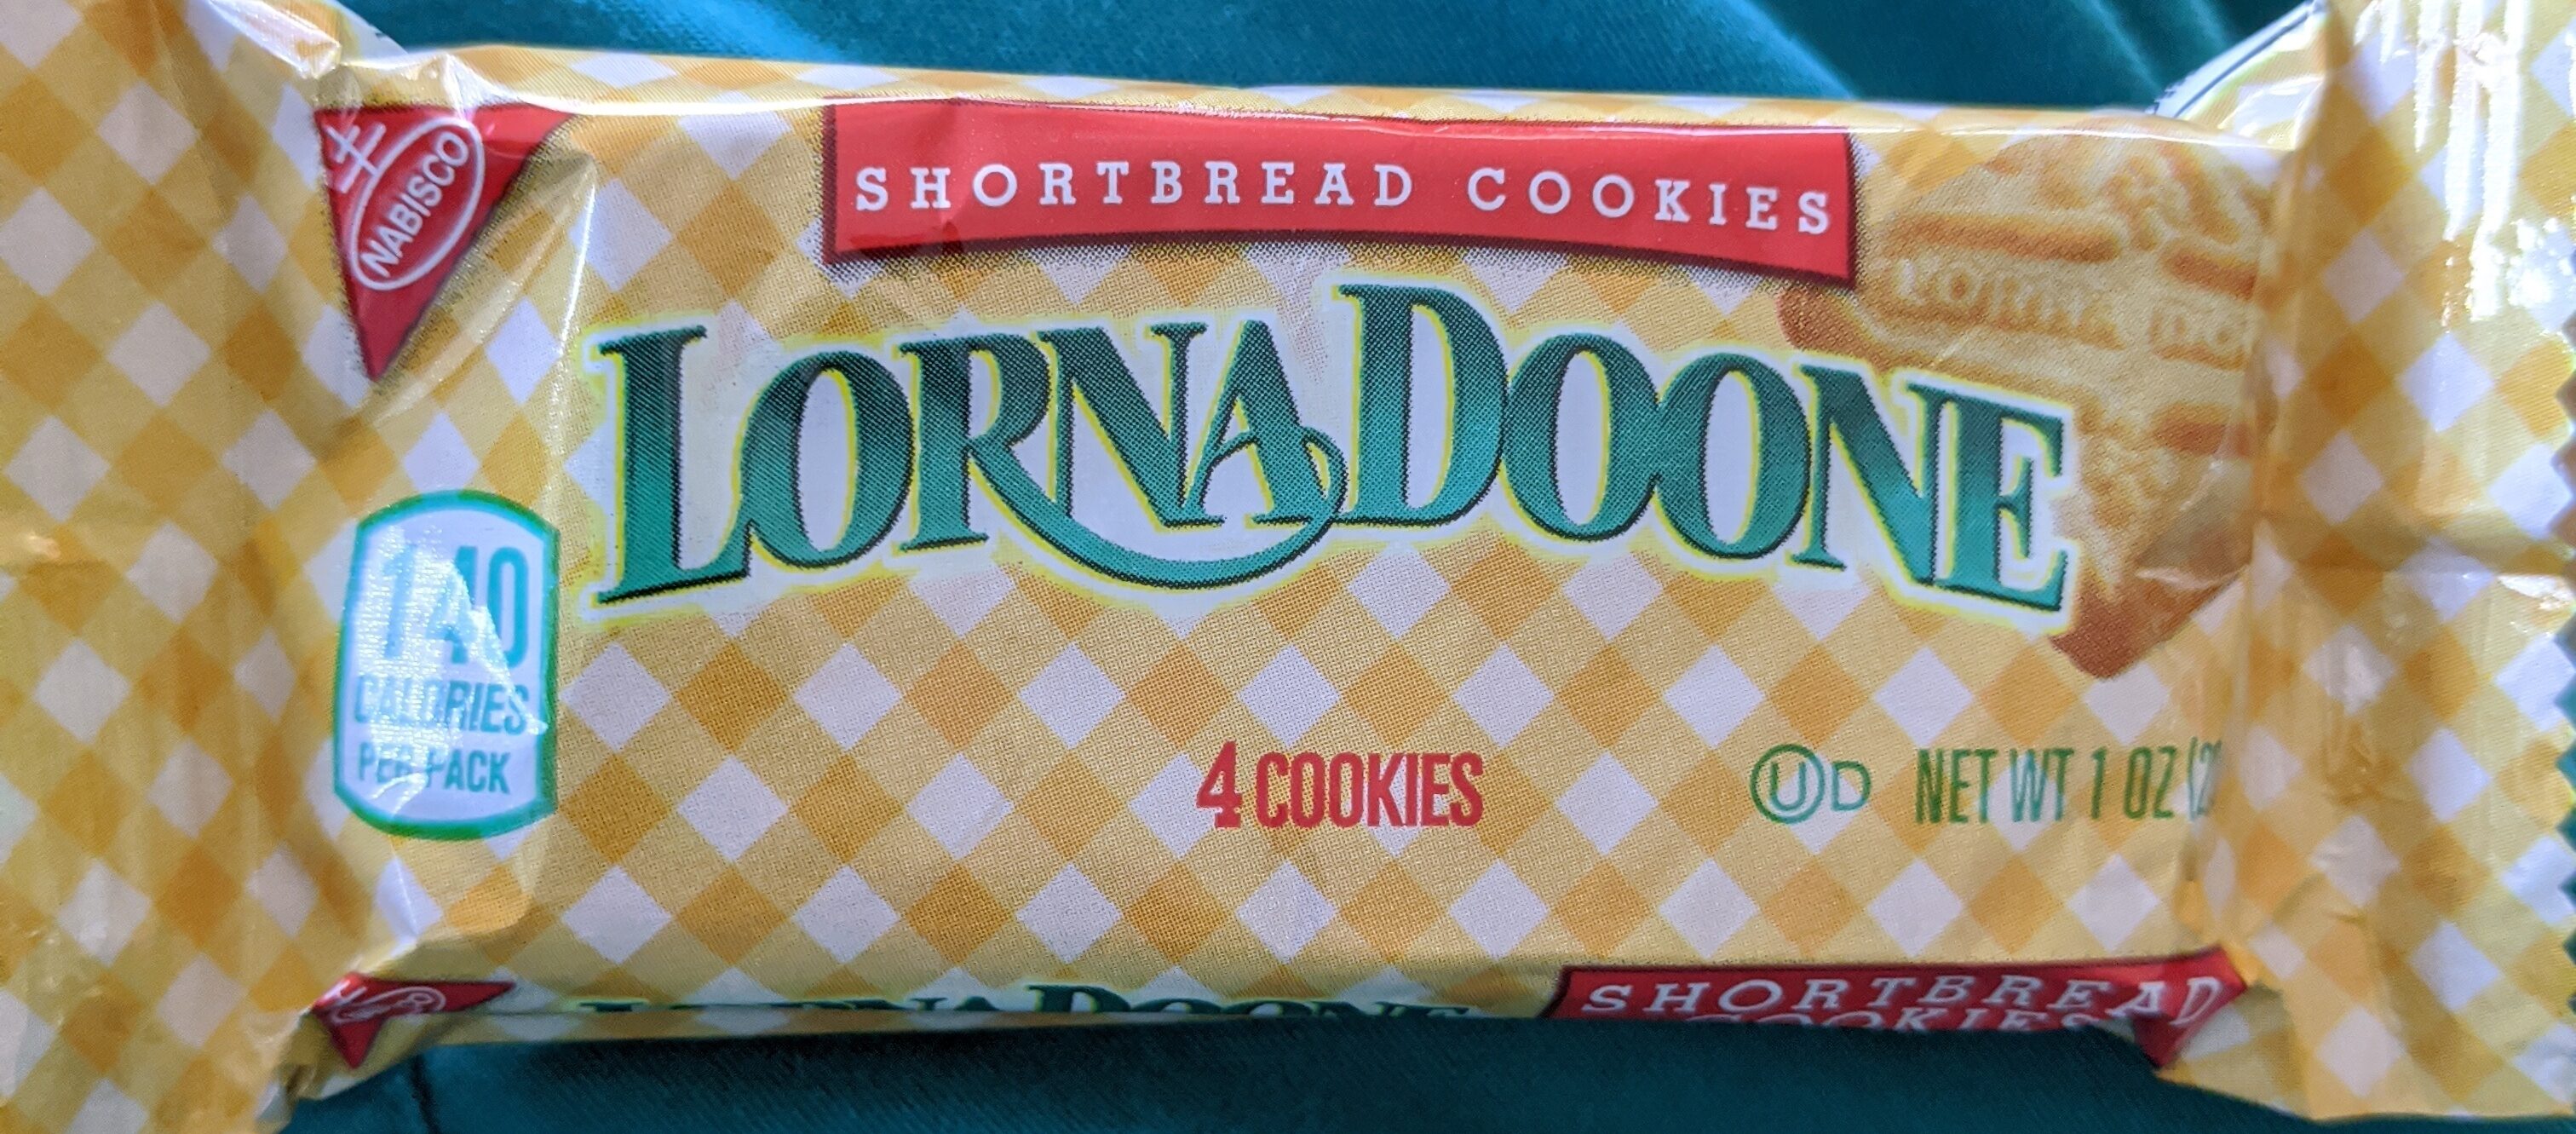 Shortbread Cookies - Product